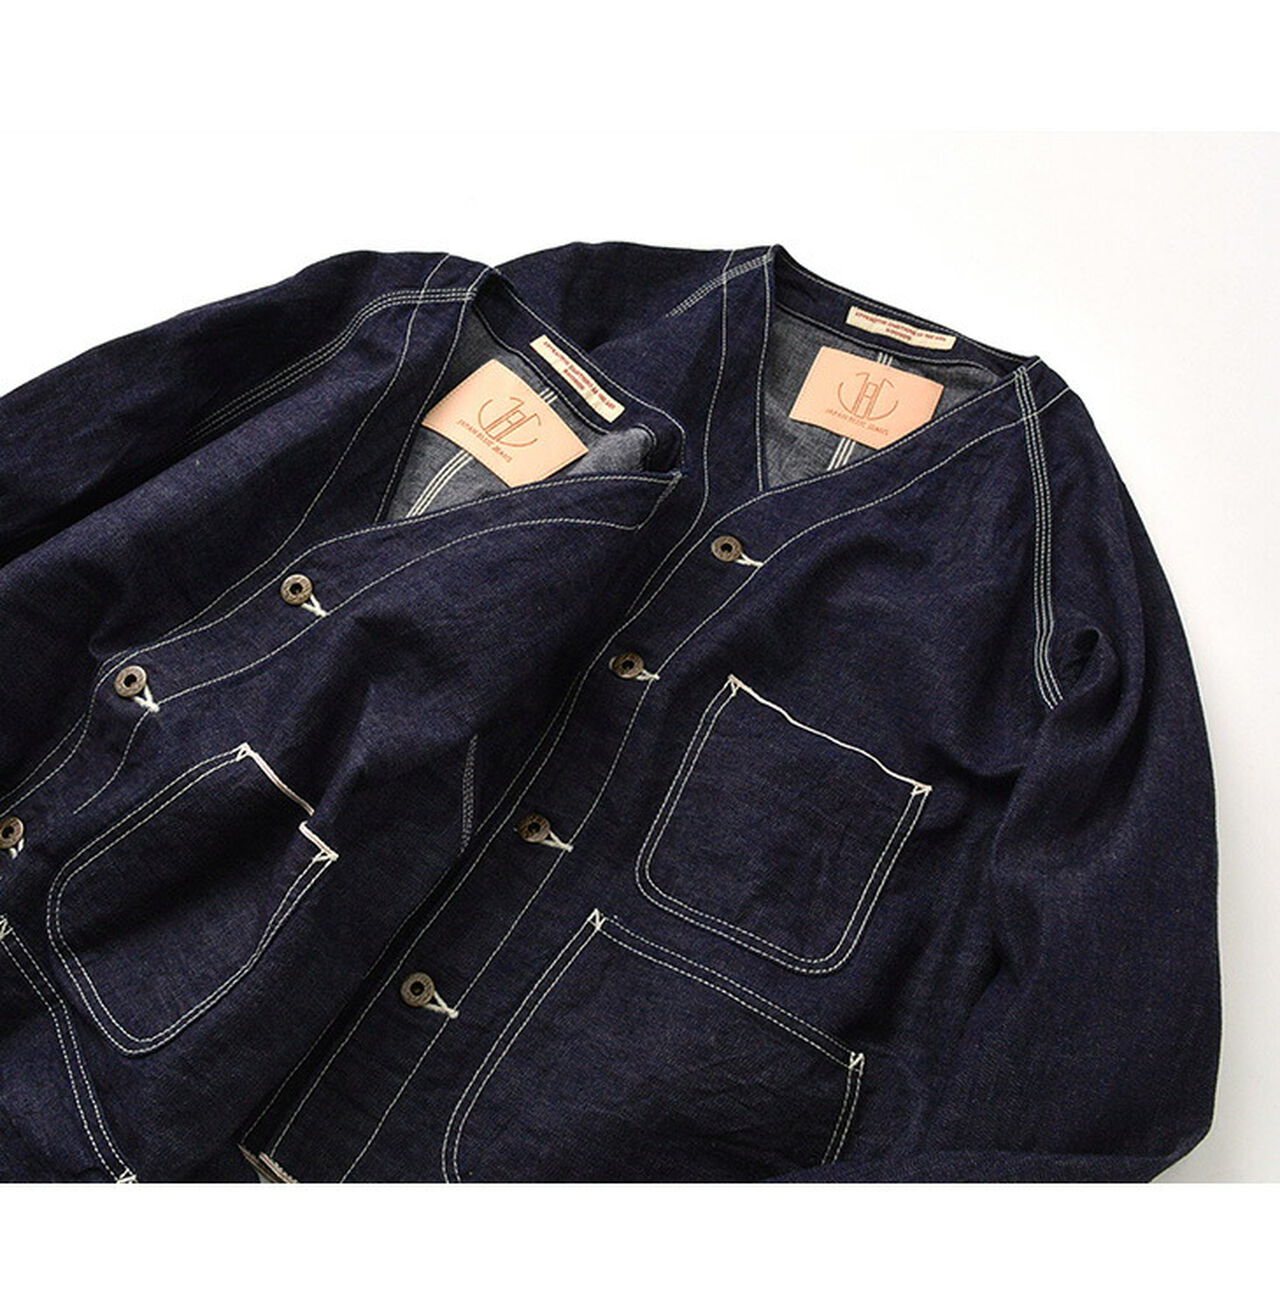 Check out GANRYU's Unique Adjustable Nylon Strap Selvedge Denim Jacket